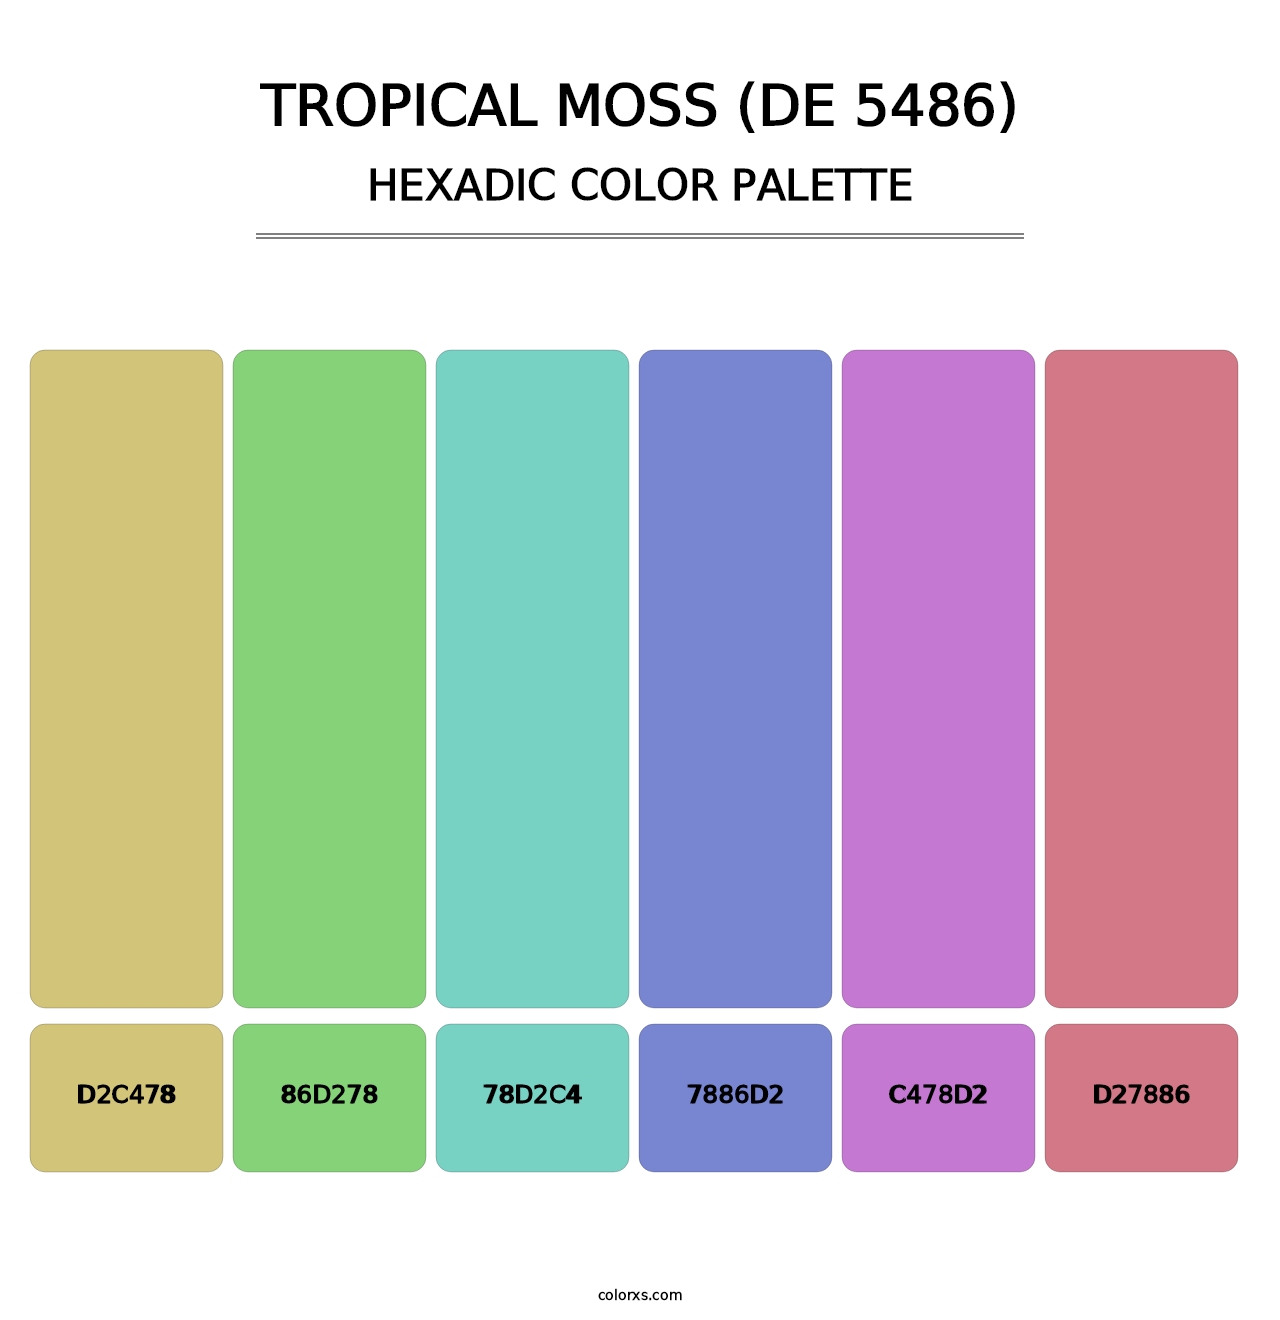 Tropical Moss (DE 5486) - Hexadic Color Palette